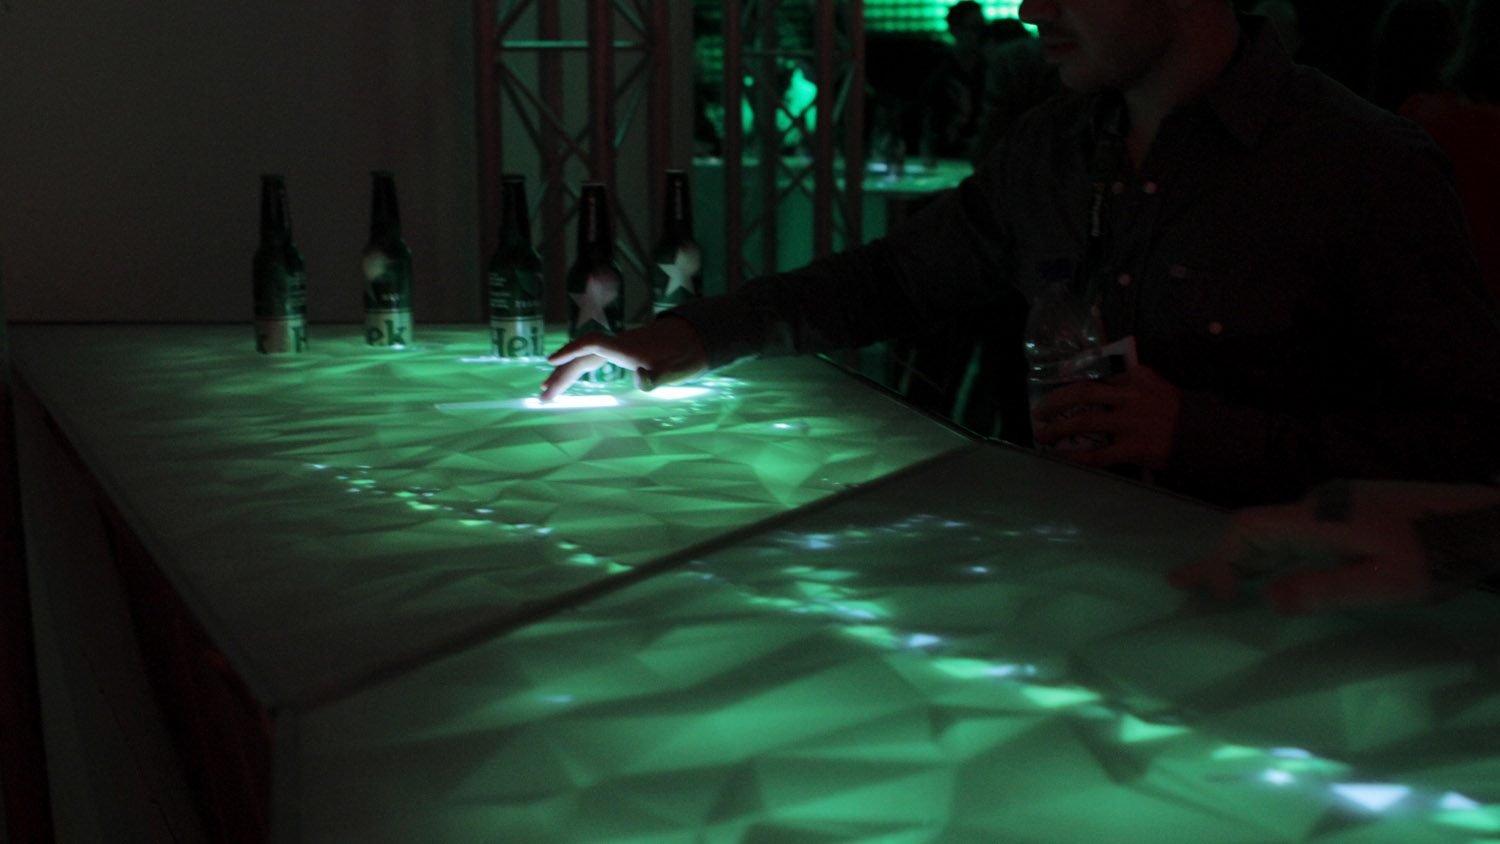 Heineken Interactive Bar - interactive multi-touch bar surface